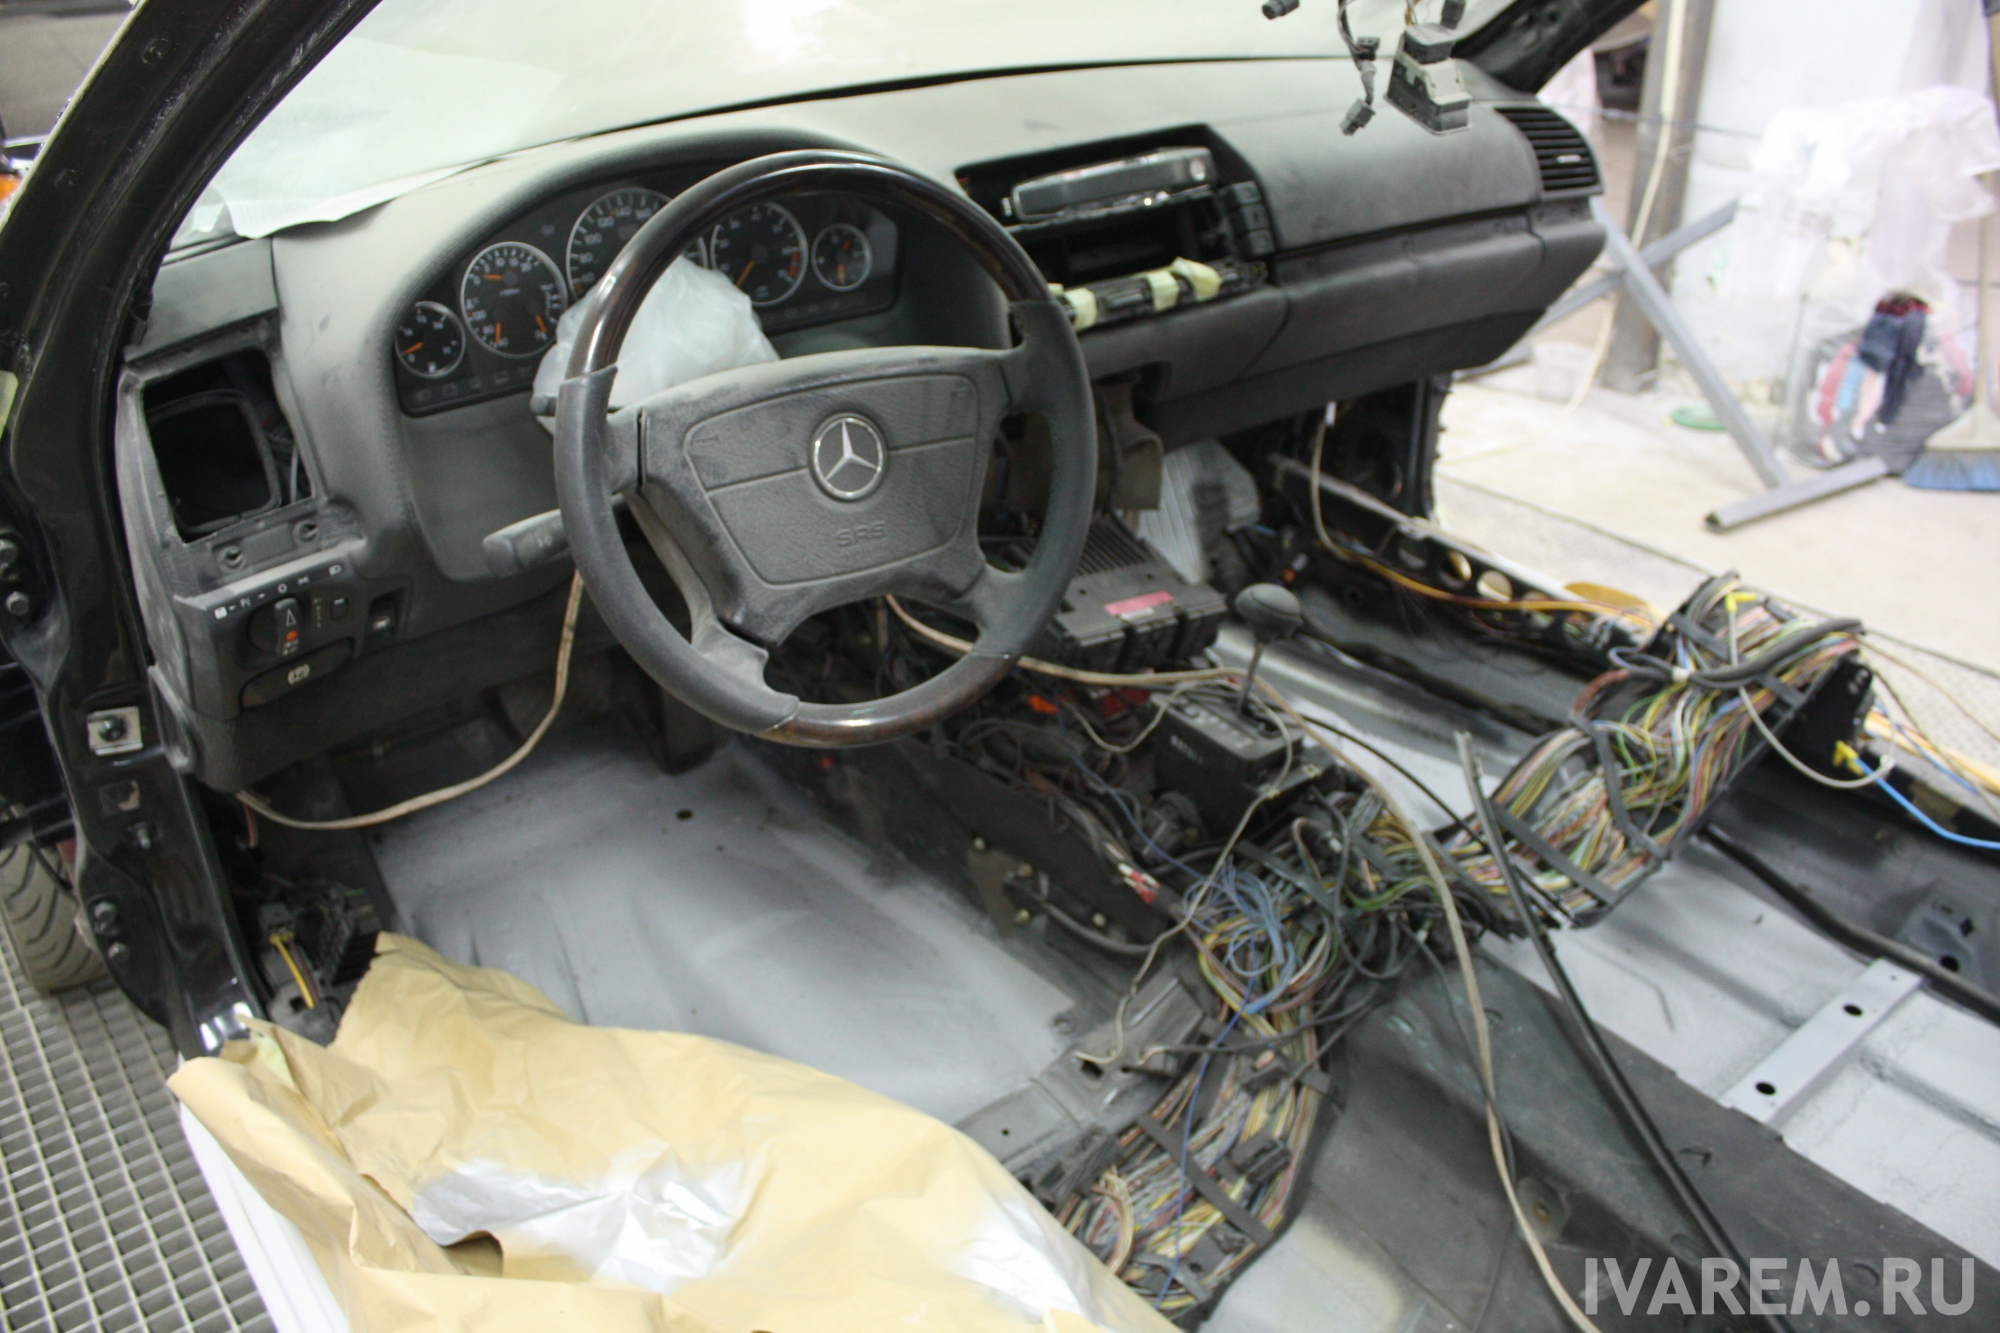 Mercedes Benz W140 Coupe полная реставрация кузова и салона. mercedes, mercedes-benz, w140, авто, ремонт кузова, ремонт салона